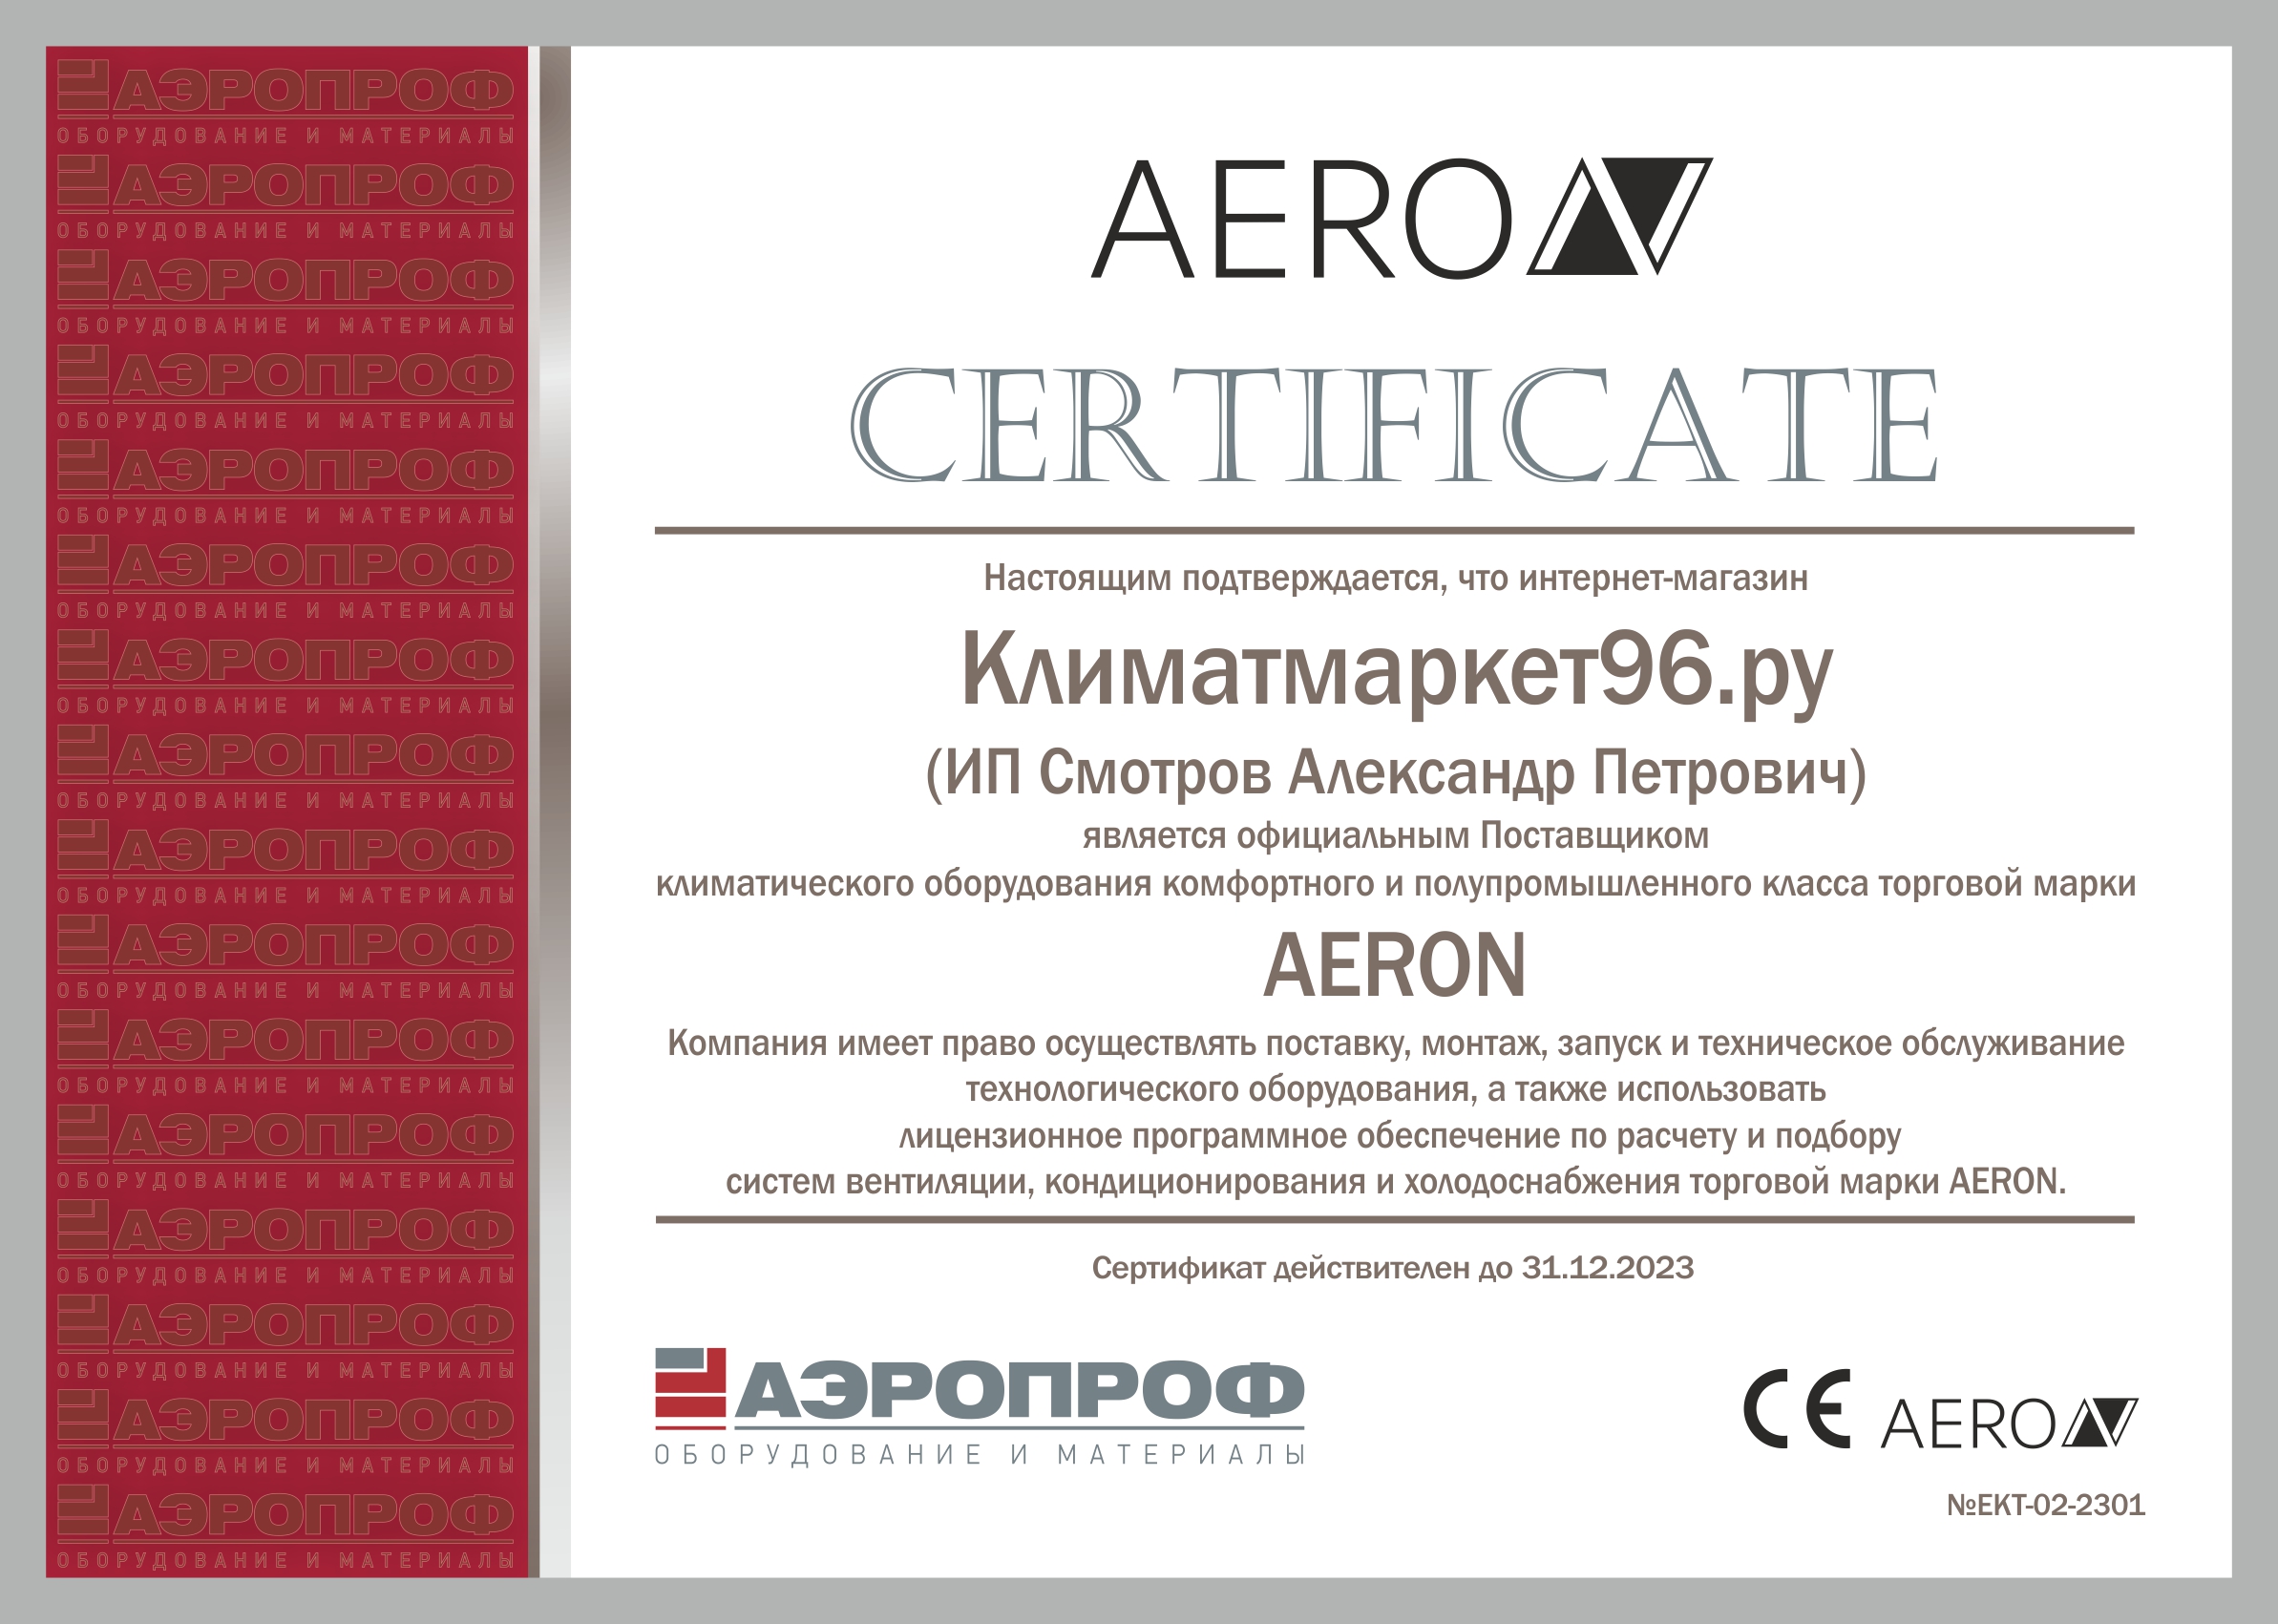 sert23-km96-aeron Kondicioner Aero ARS-II-18IHN21D6-01/ARS-II-18OHN21D6-01 kypit v Ekaterinbyrge v internet-magazine KlimatMarket96.ry Сертификат официального дилера